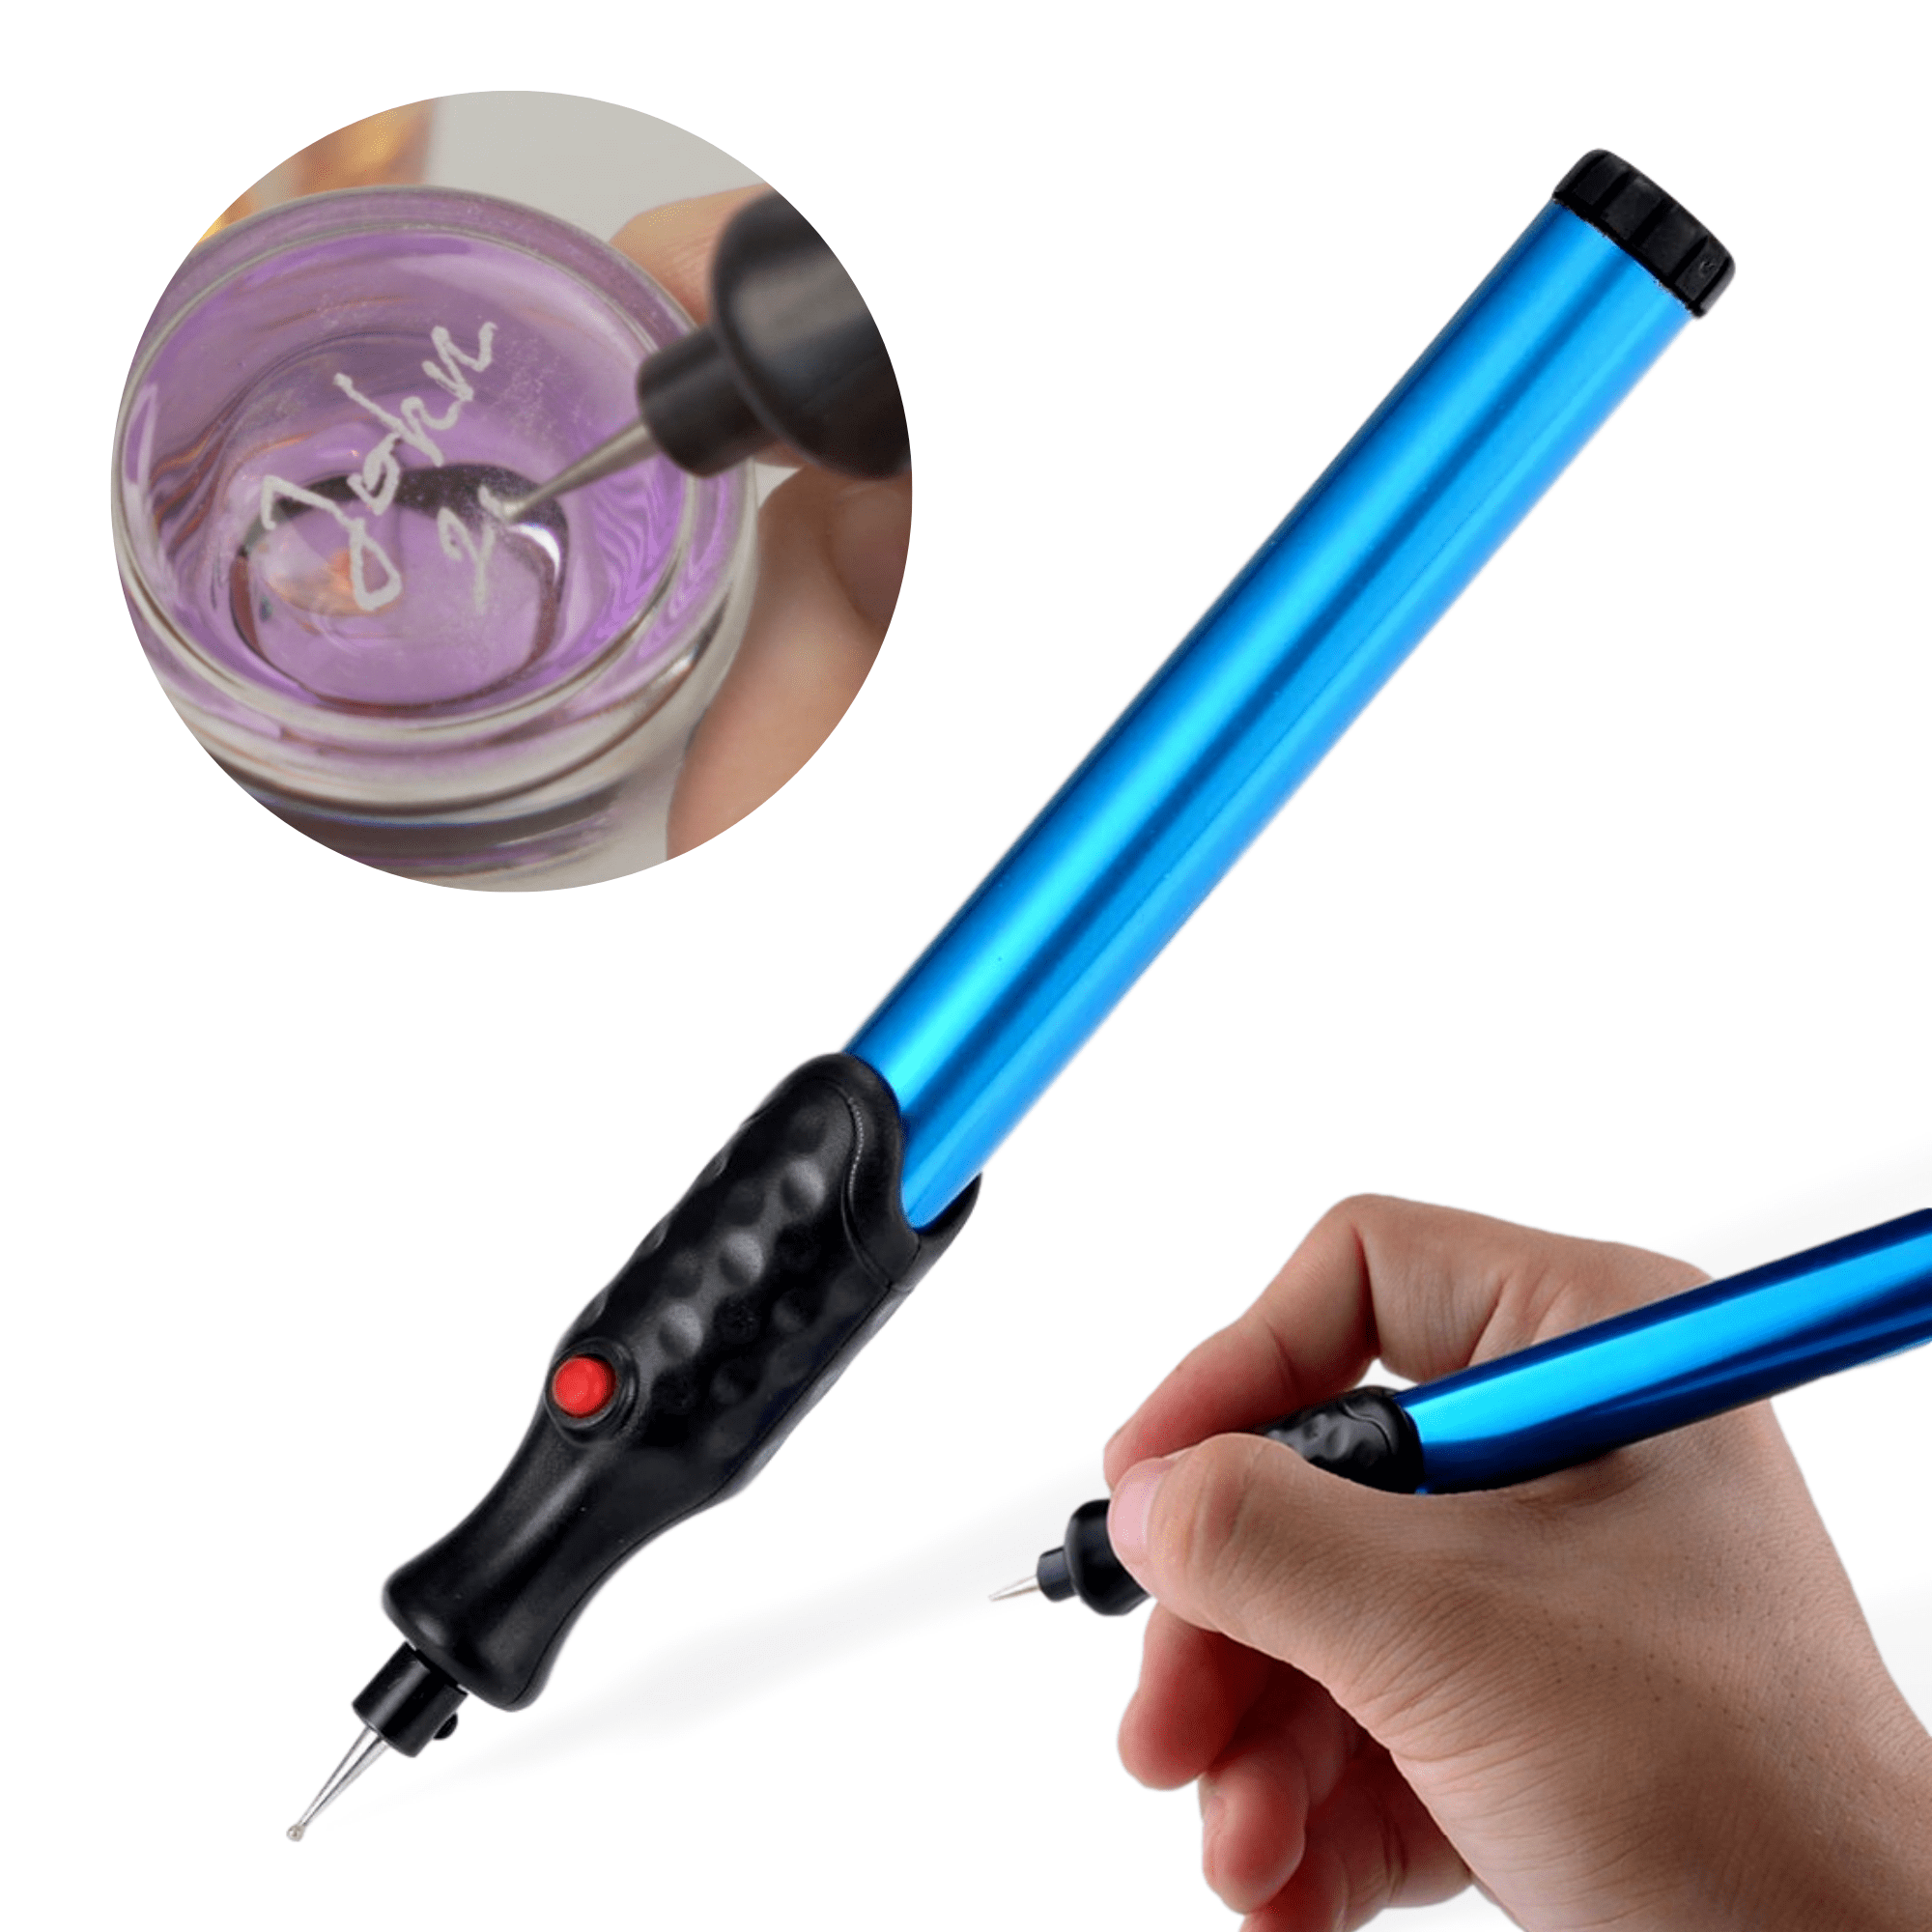  The Artisan Pen - A DIY Engraving Pen, Artisan Pen Engraving  Tool, USB Rechargable Cordless Professional Engraving Pen,for Metal, Wood,  Glass and Plastic (Set 3) : Arts, Crafts & Sewing